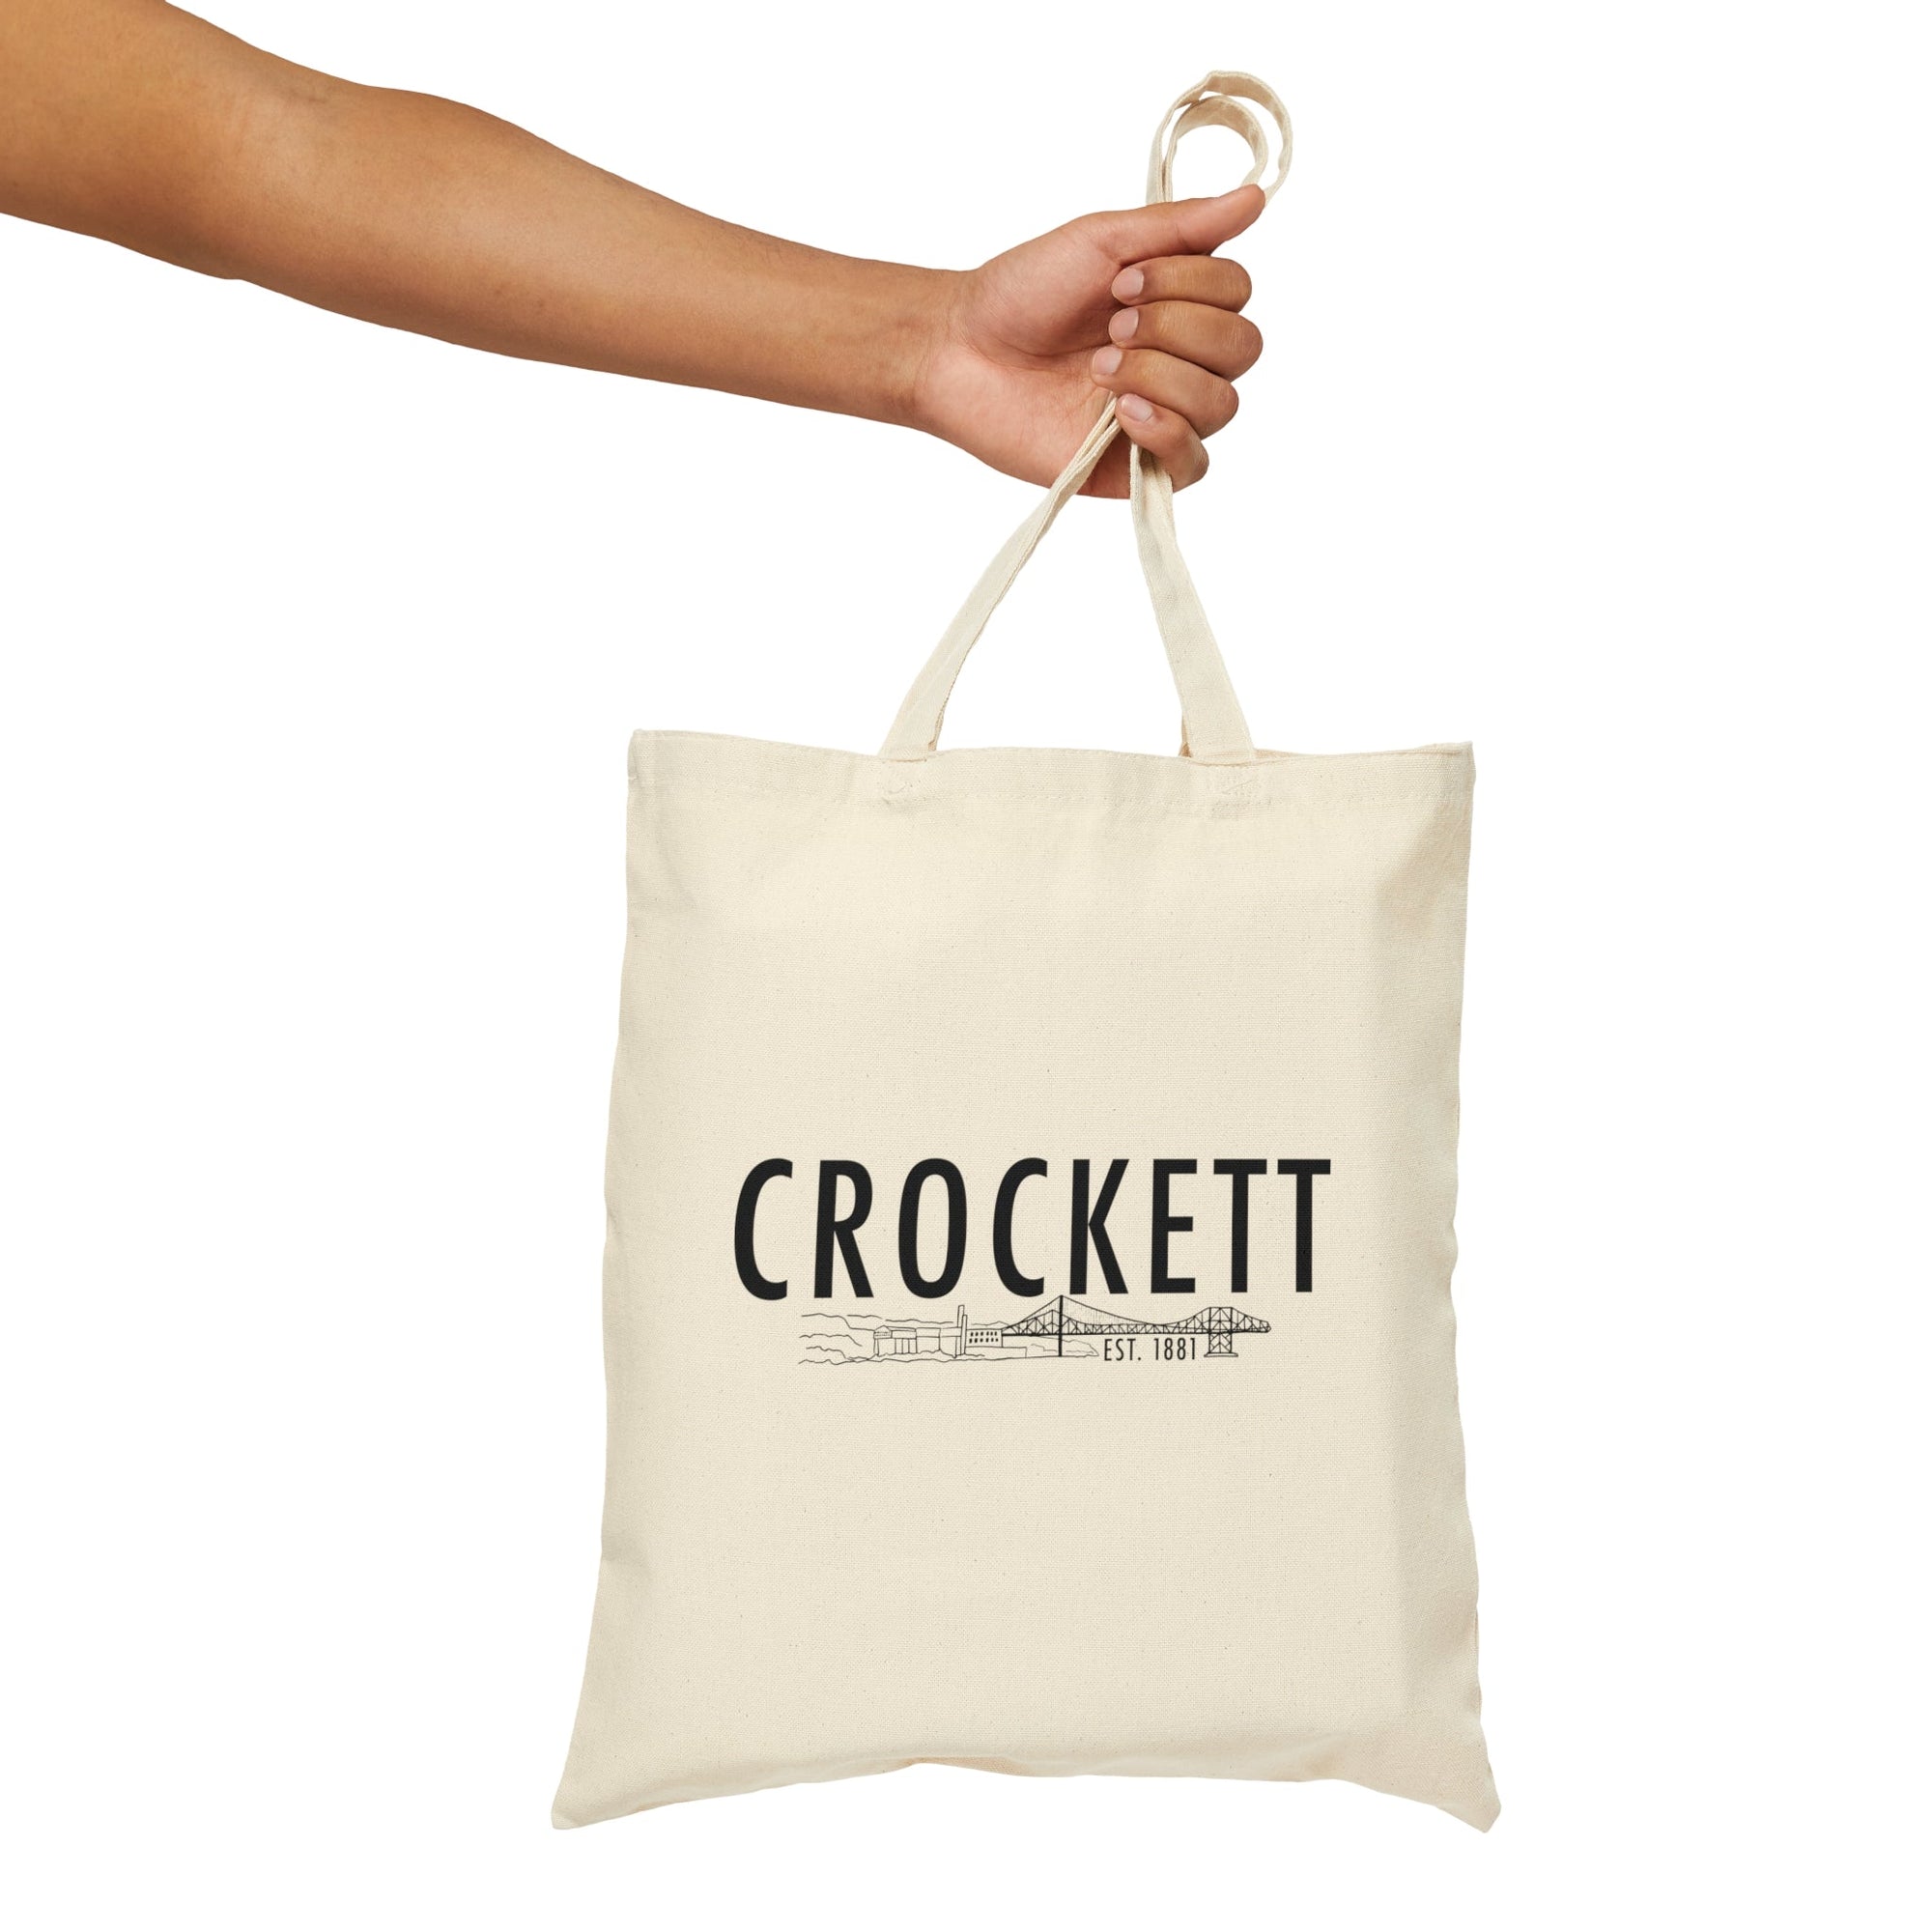 Crockett- Cotton Canvas Tote Bag